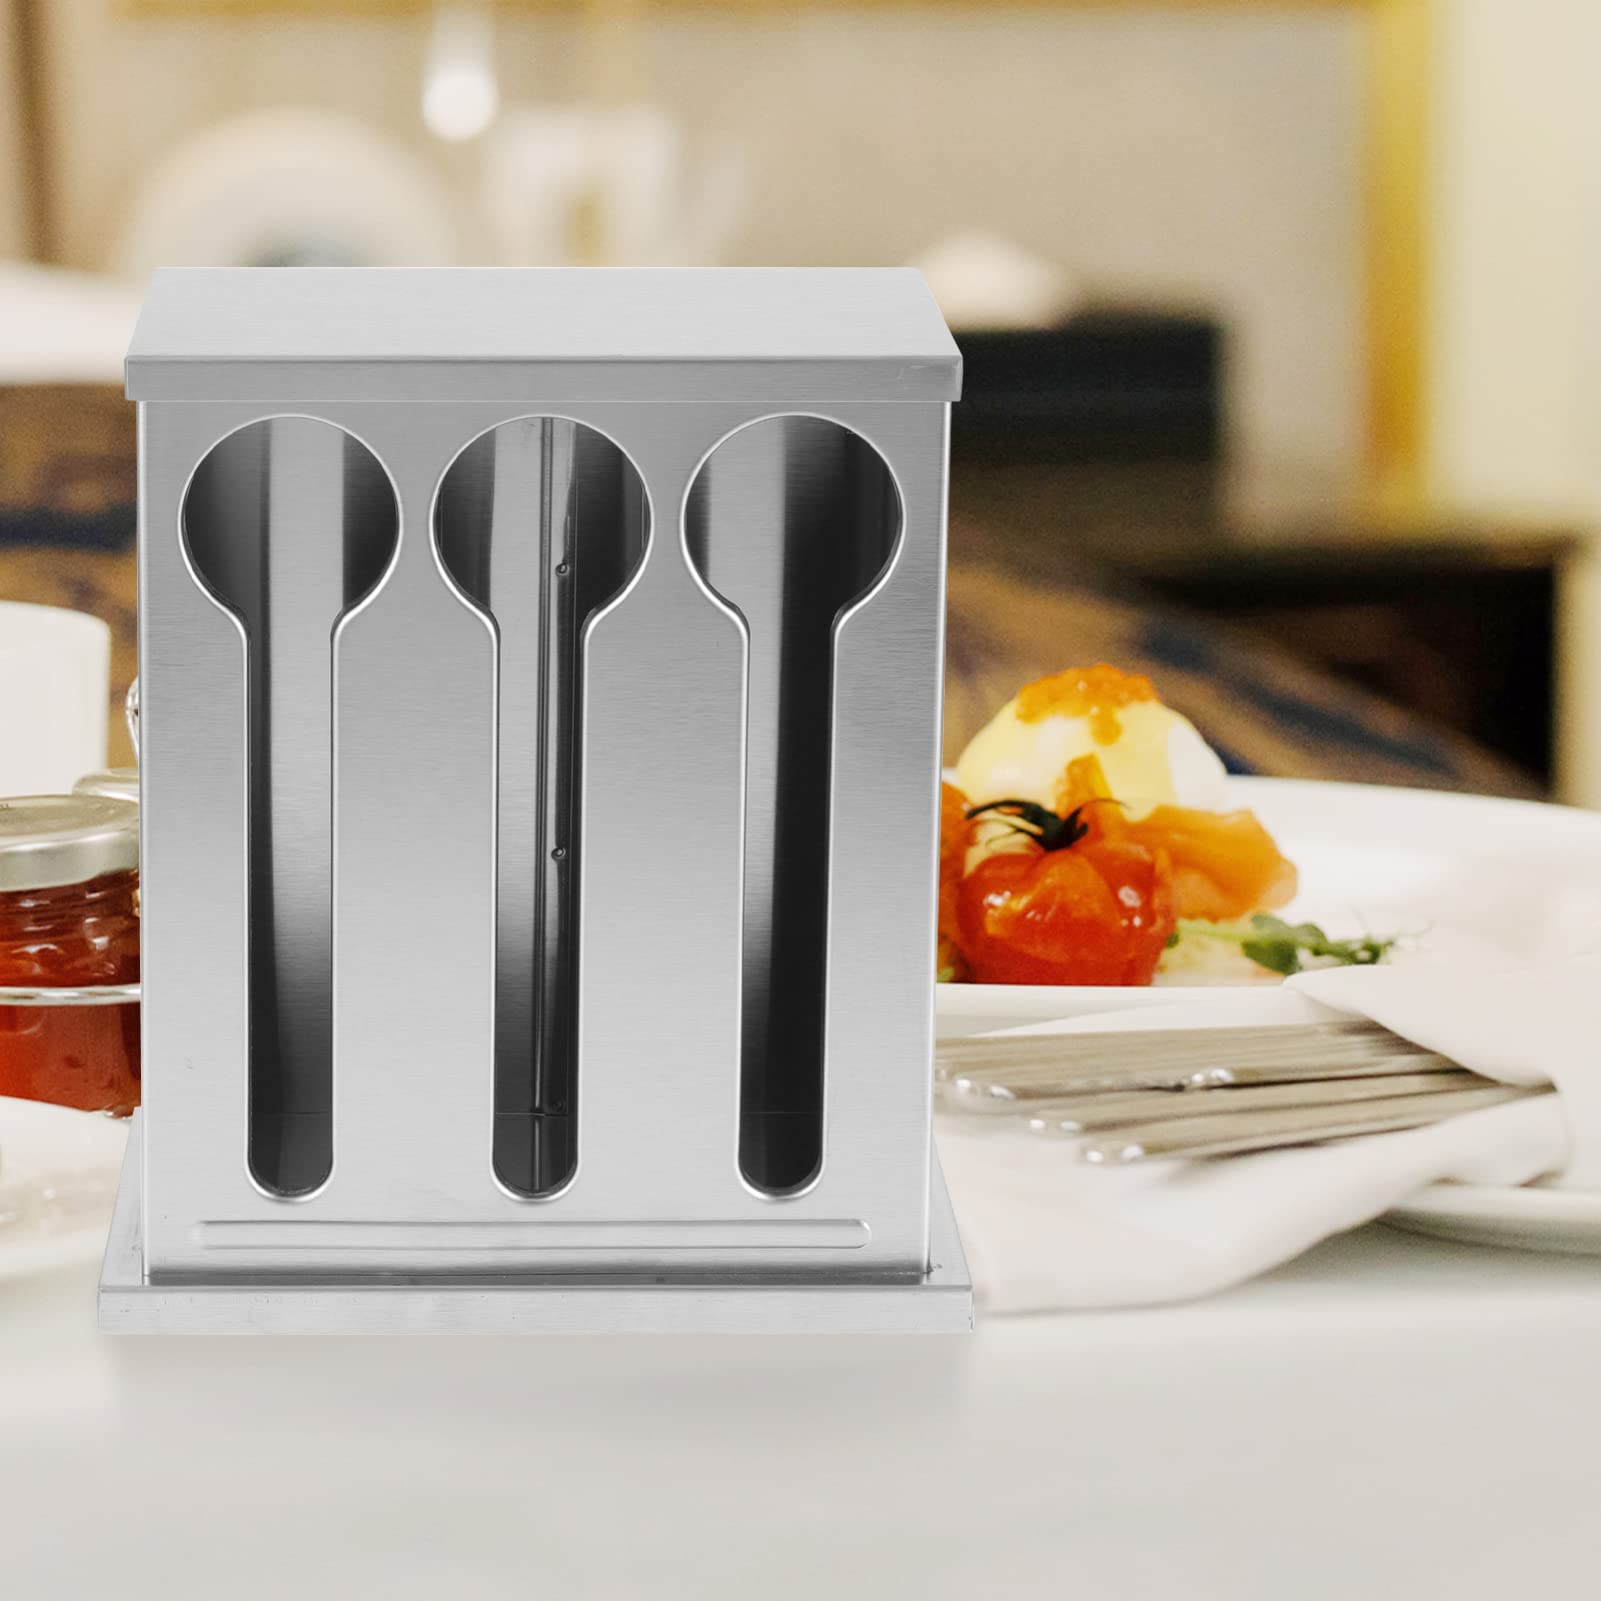 UPKOCH Utensil Dispenser 3 Compartment Stainless Steel Cutlery Organizer Silverware Holder Caddy Forks Spoons Knives Flatware Dispenser for Restaurant Kitchen